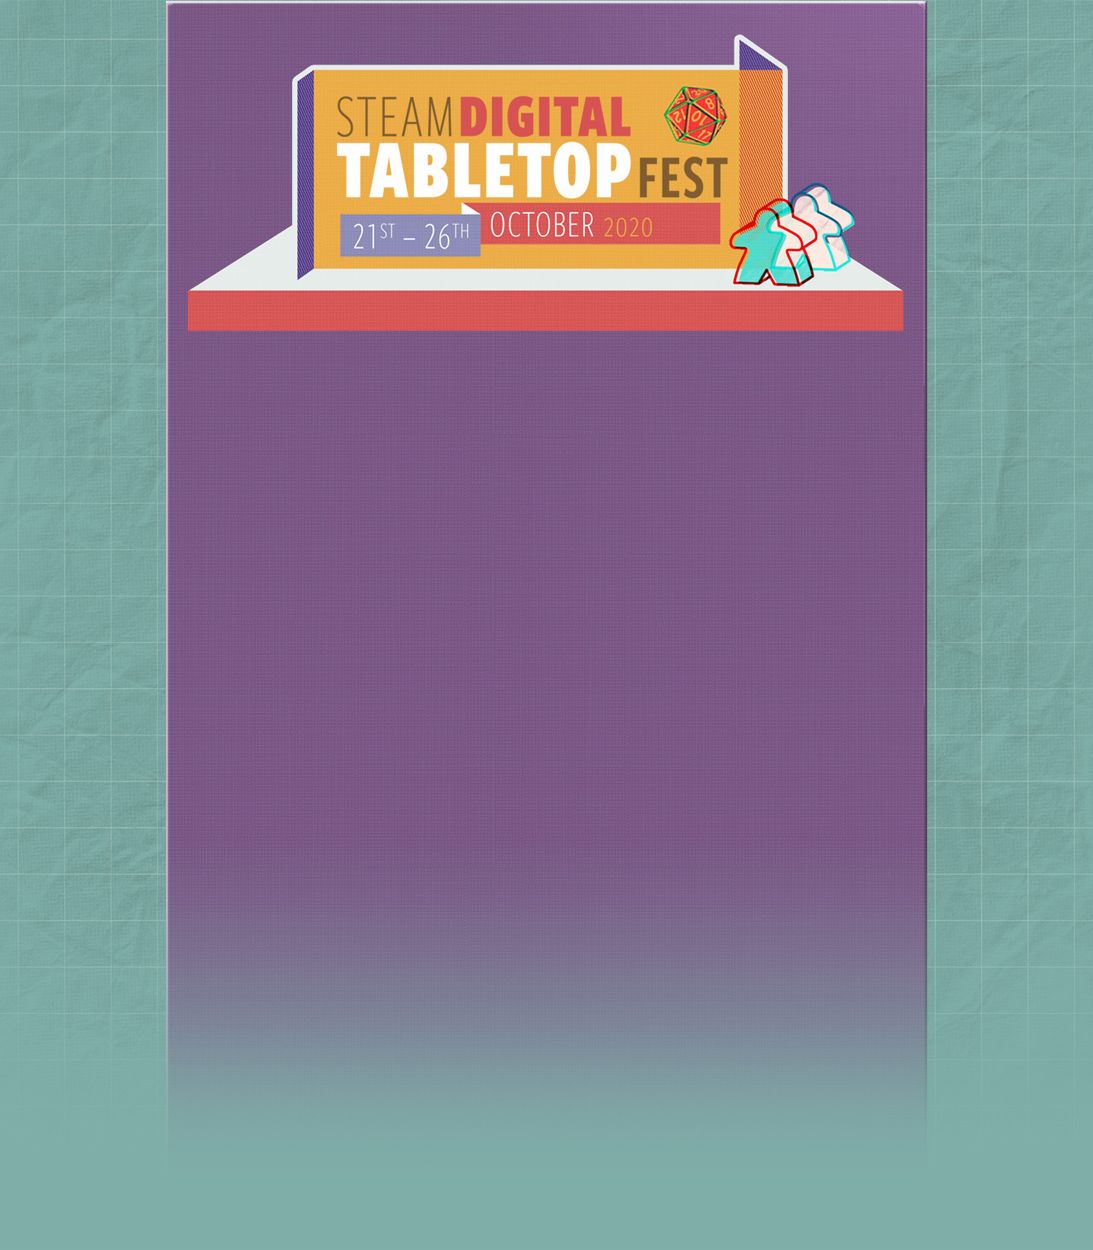 TLDR Steam Digital Tabletop Fest